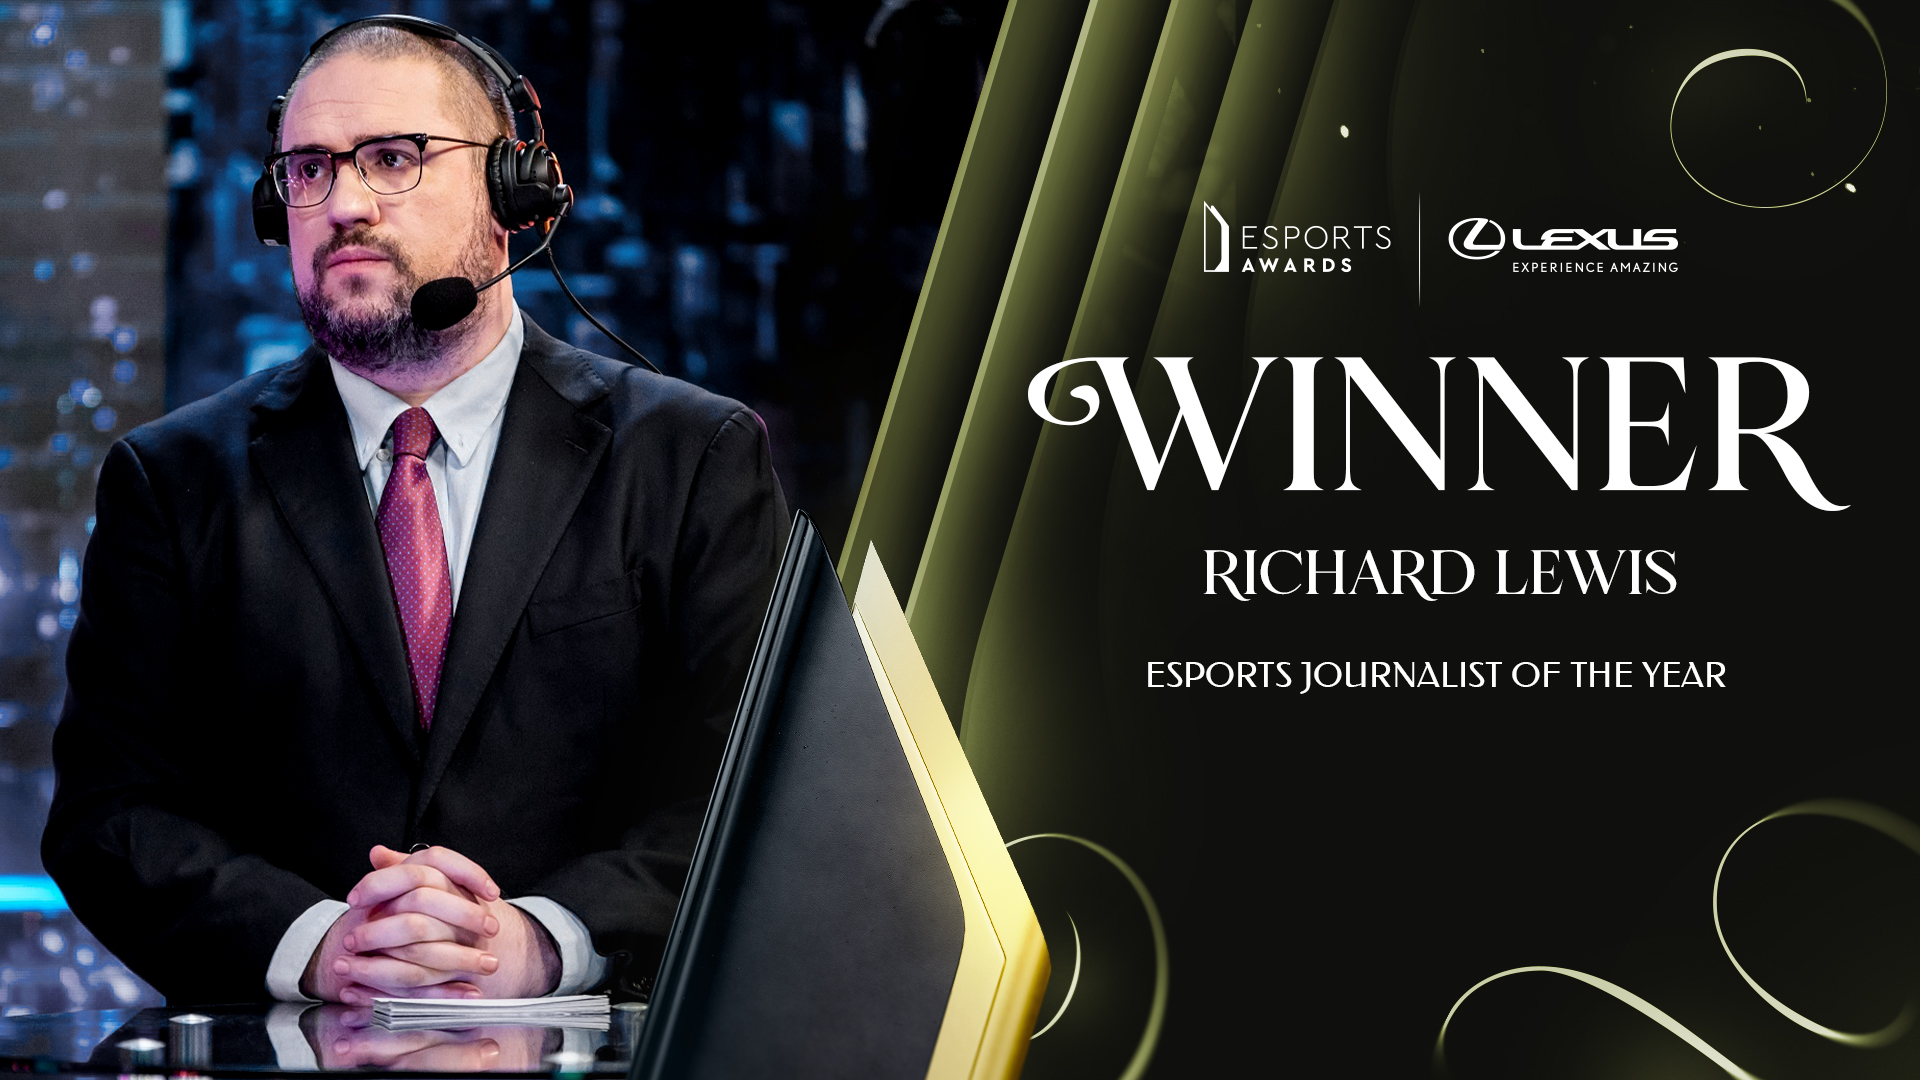 Esports Journalist of the Year: Richard Lewis